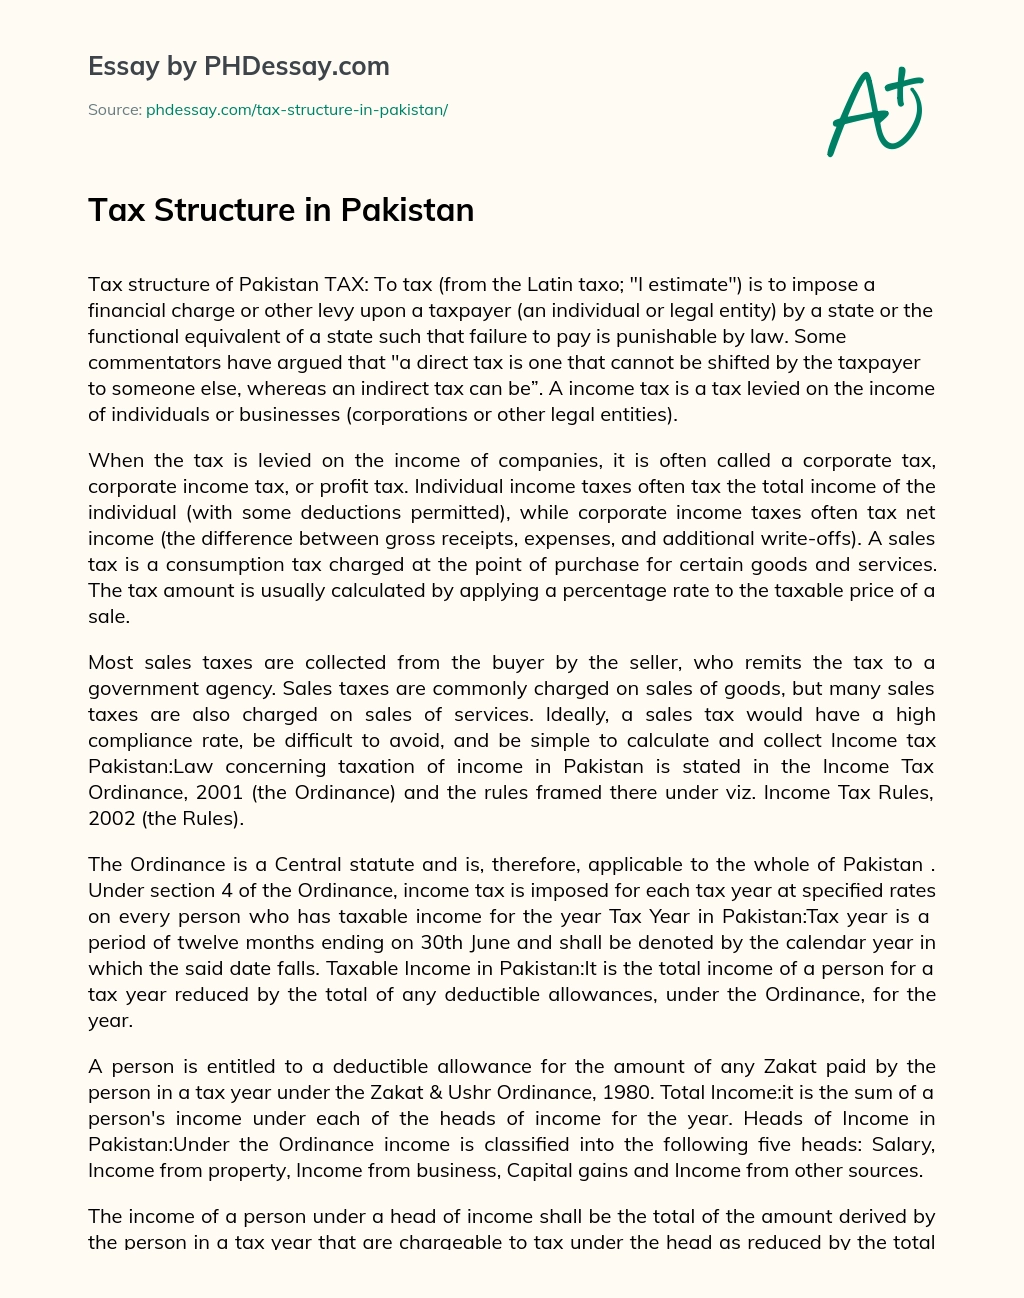 Tax Structure in Pakistan essay